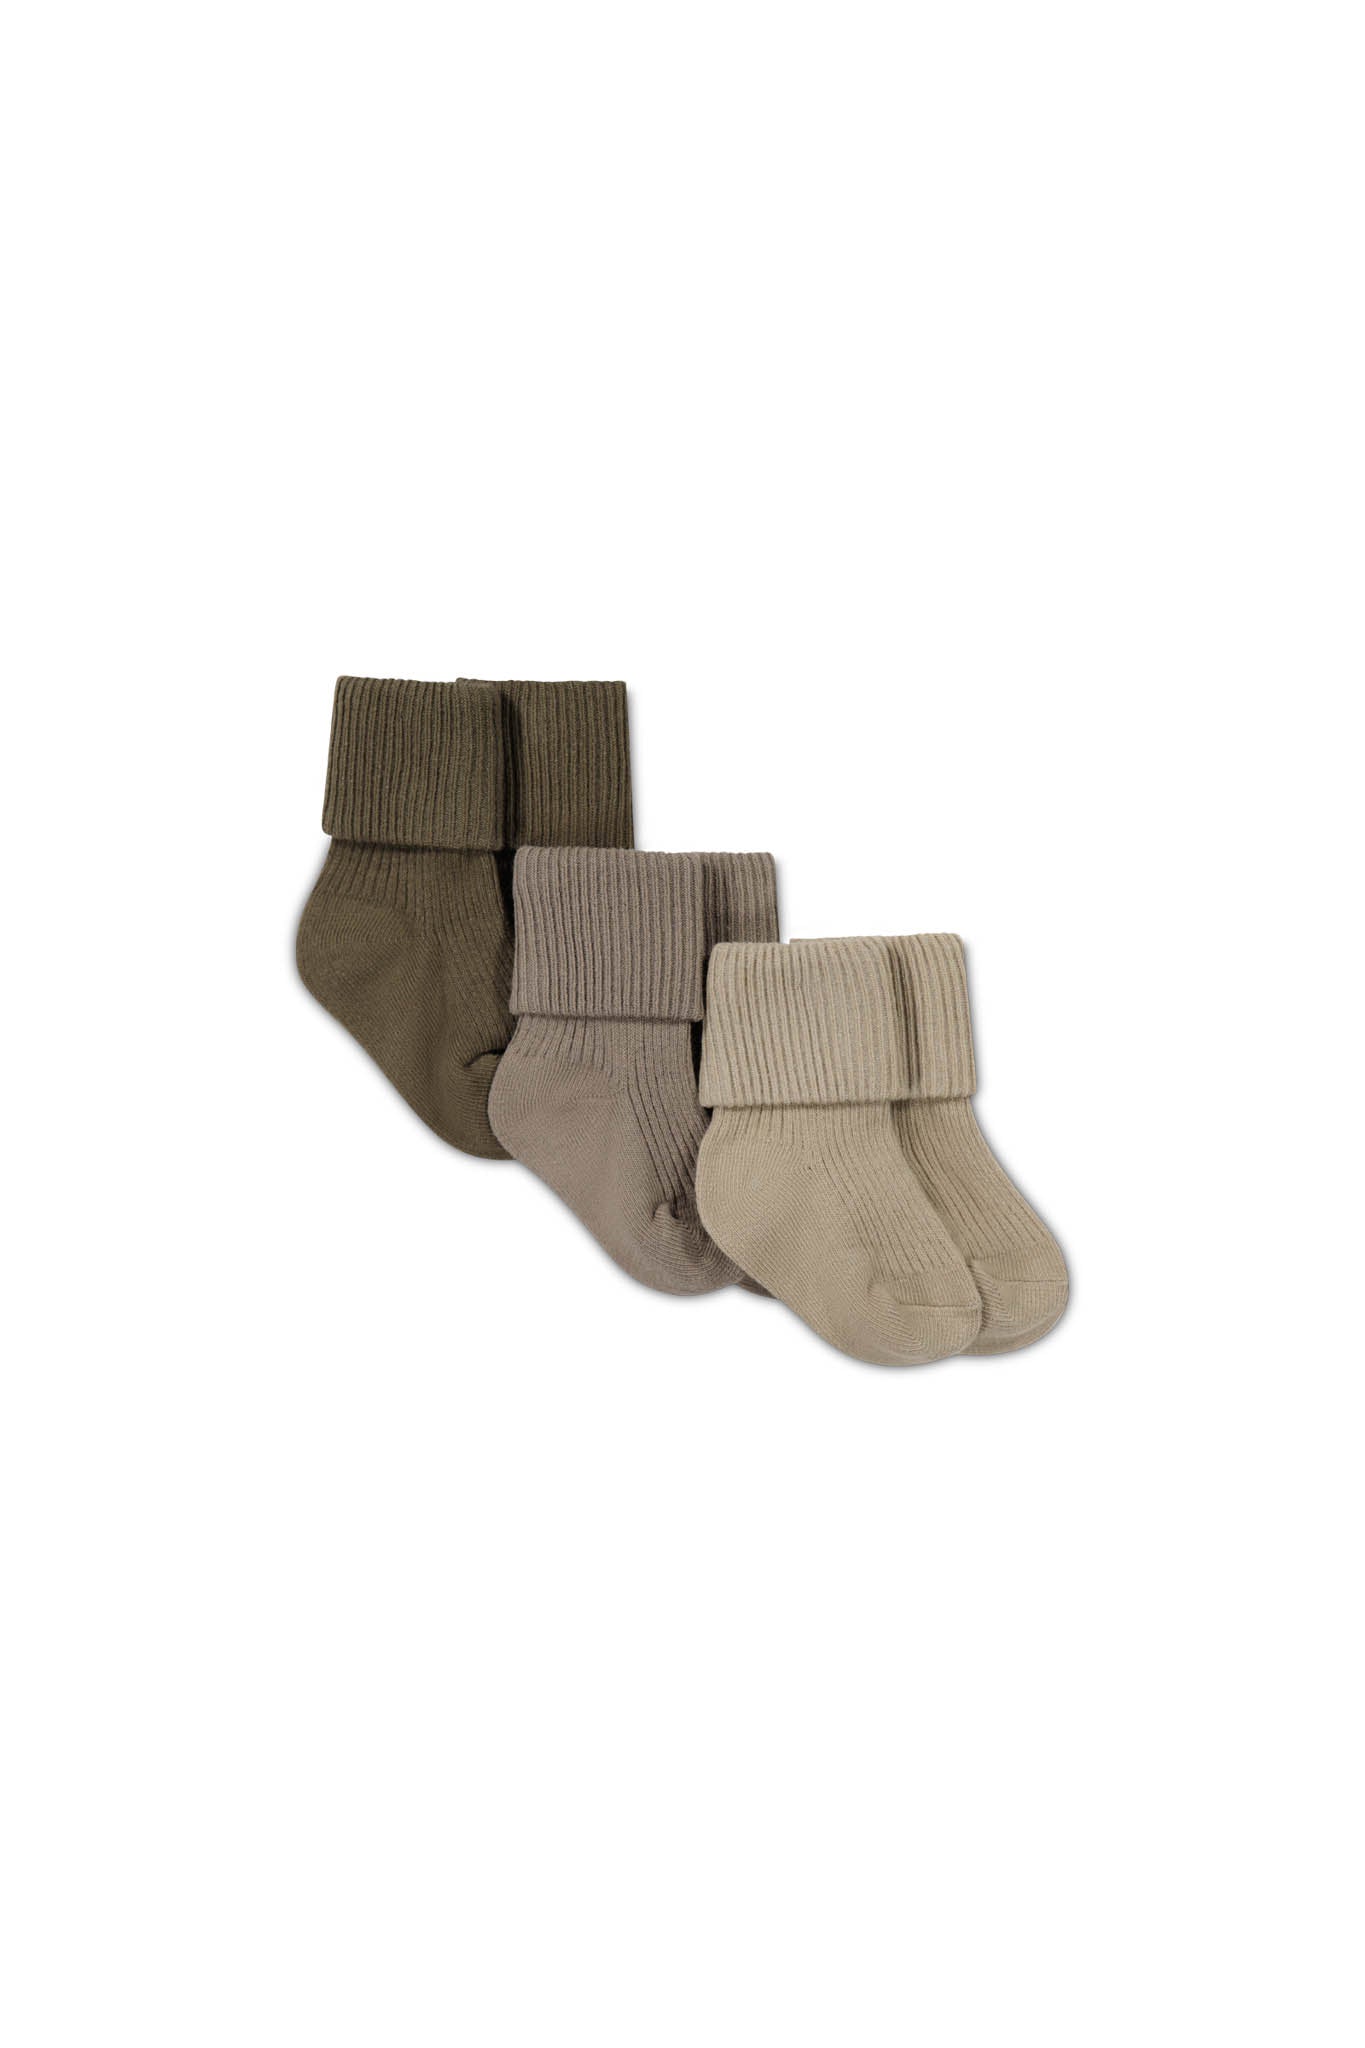 3 Pack Rib Sock - Bear/Greige/Feather Gray-Shoes & Socks-Jamie Kay-The Bay Room